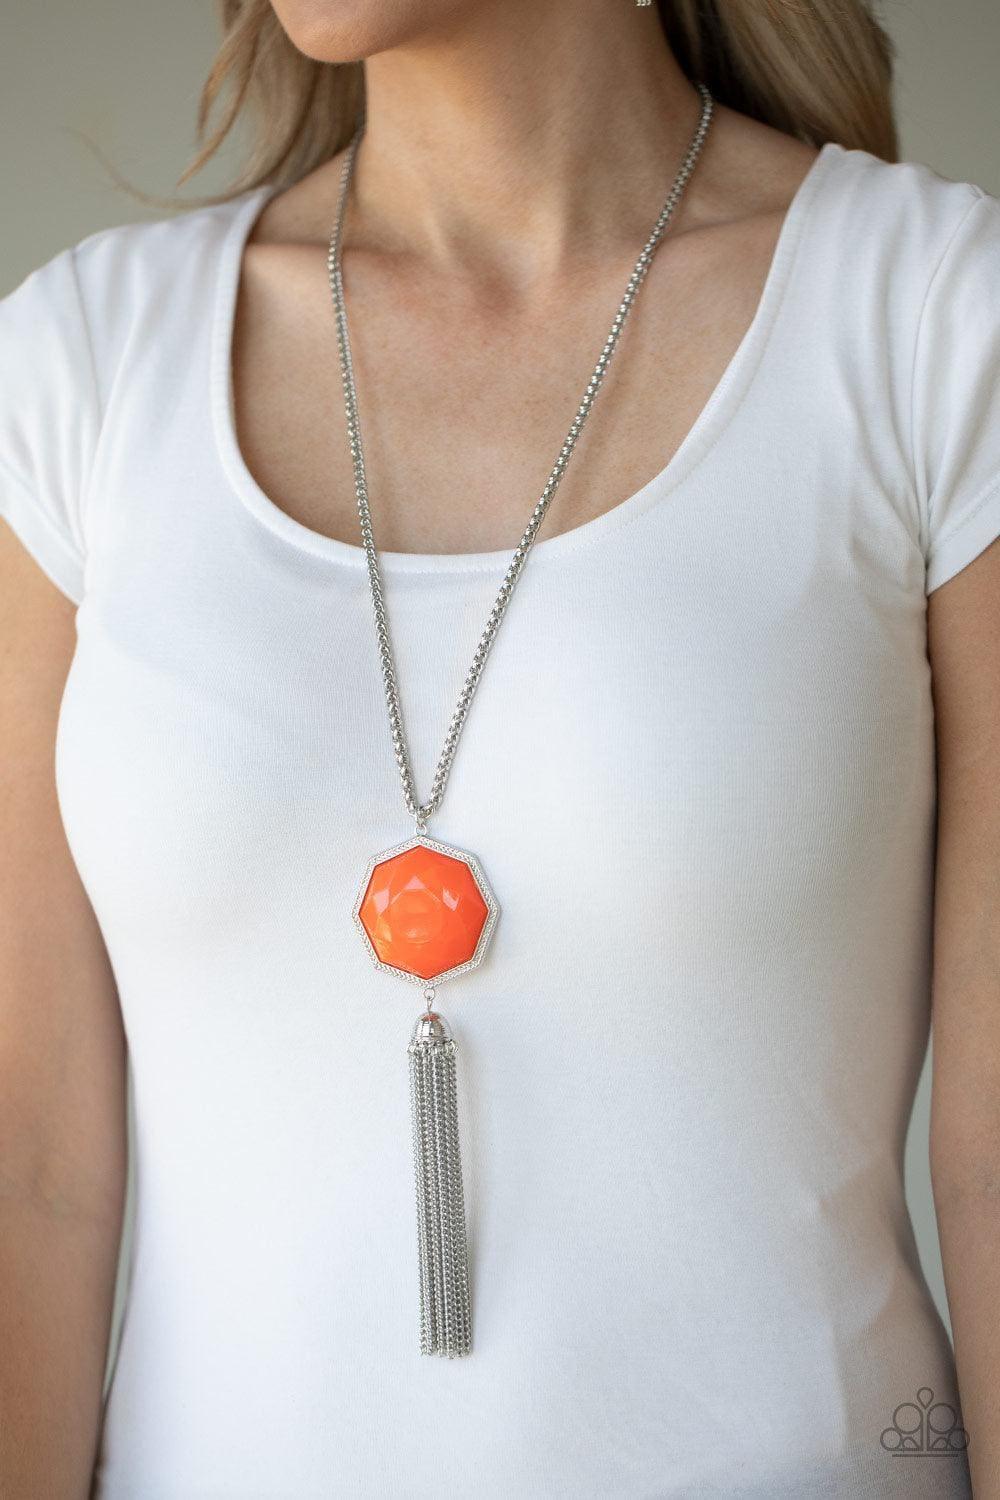 Paparazzi Accessories - Prismatically Polygon - Orange Necklace - Bling by JessieK